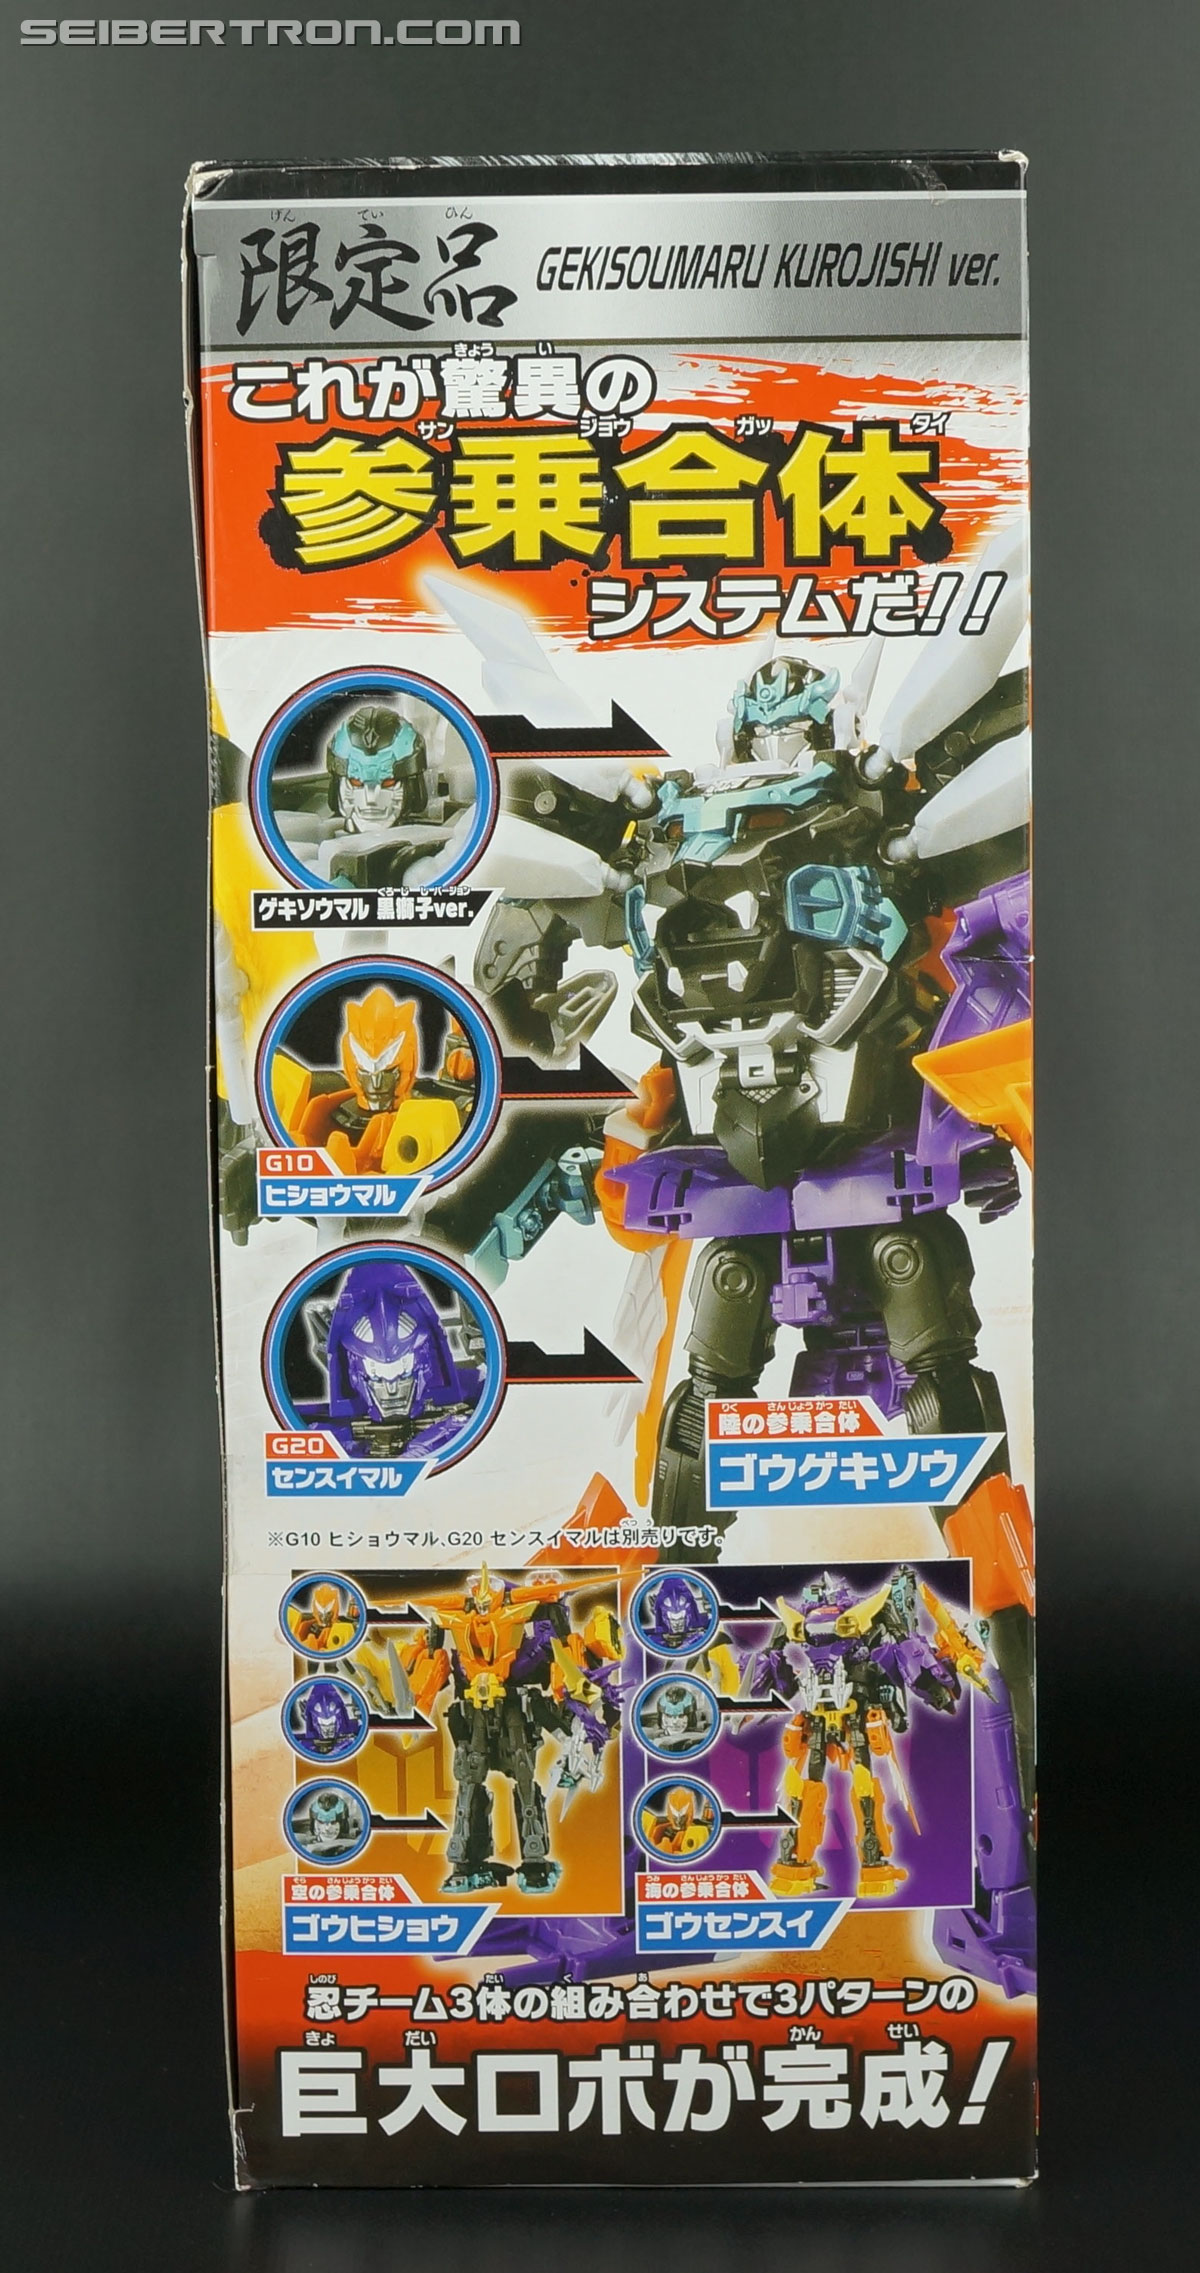 Transformers Go! Gekisoumaru (Black version) (Gekisoumaru Kurojishi ver.) (Image #4 of 215)